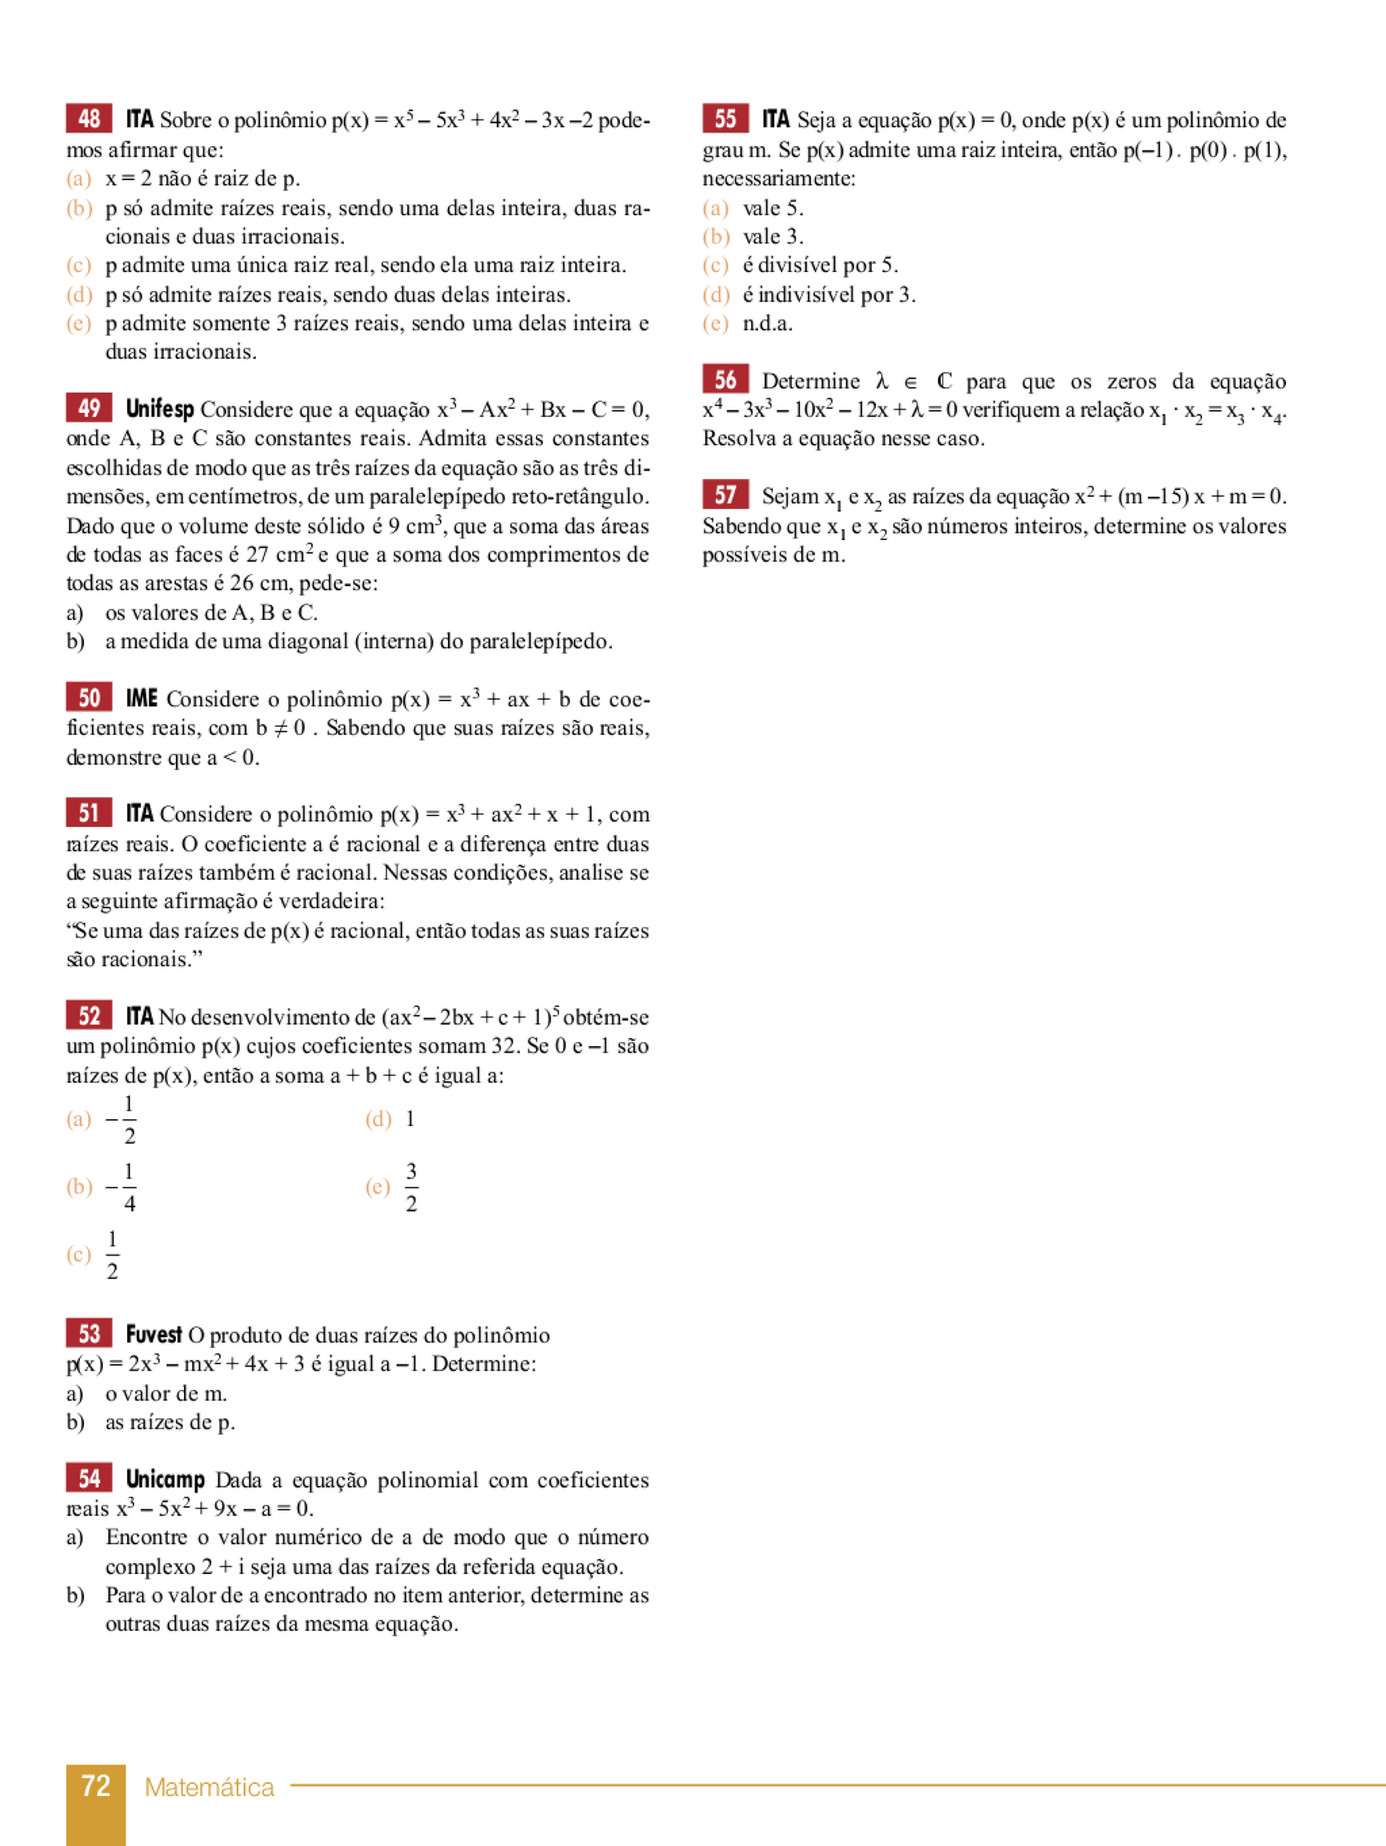 My Publications Matematica 4 Pagina 70 71 Created With Publitas Com